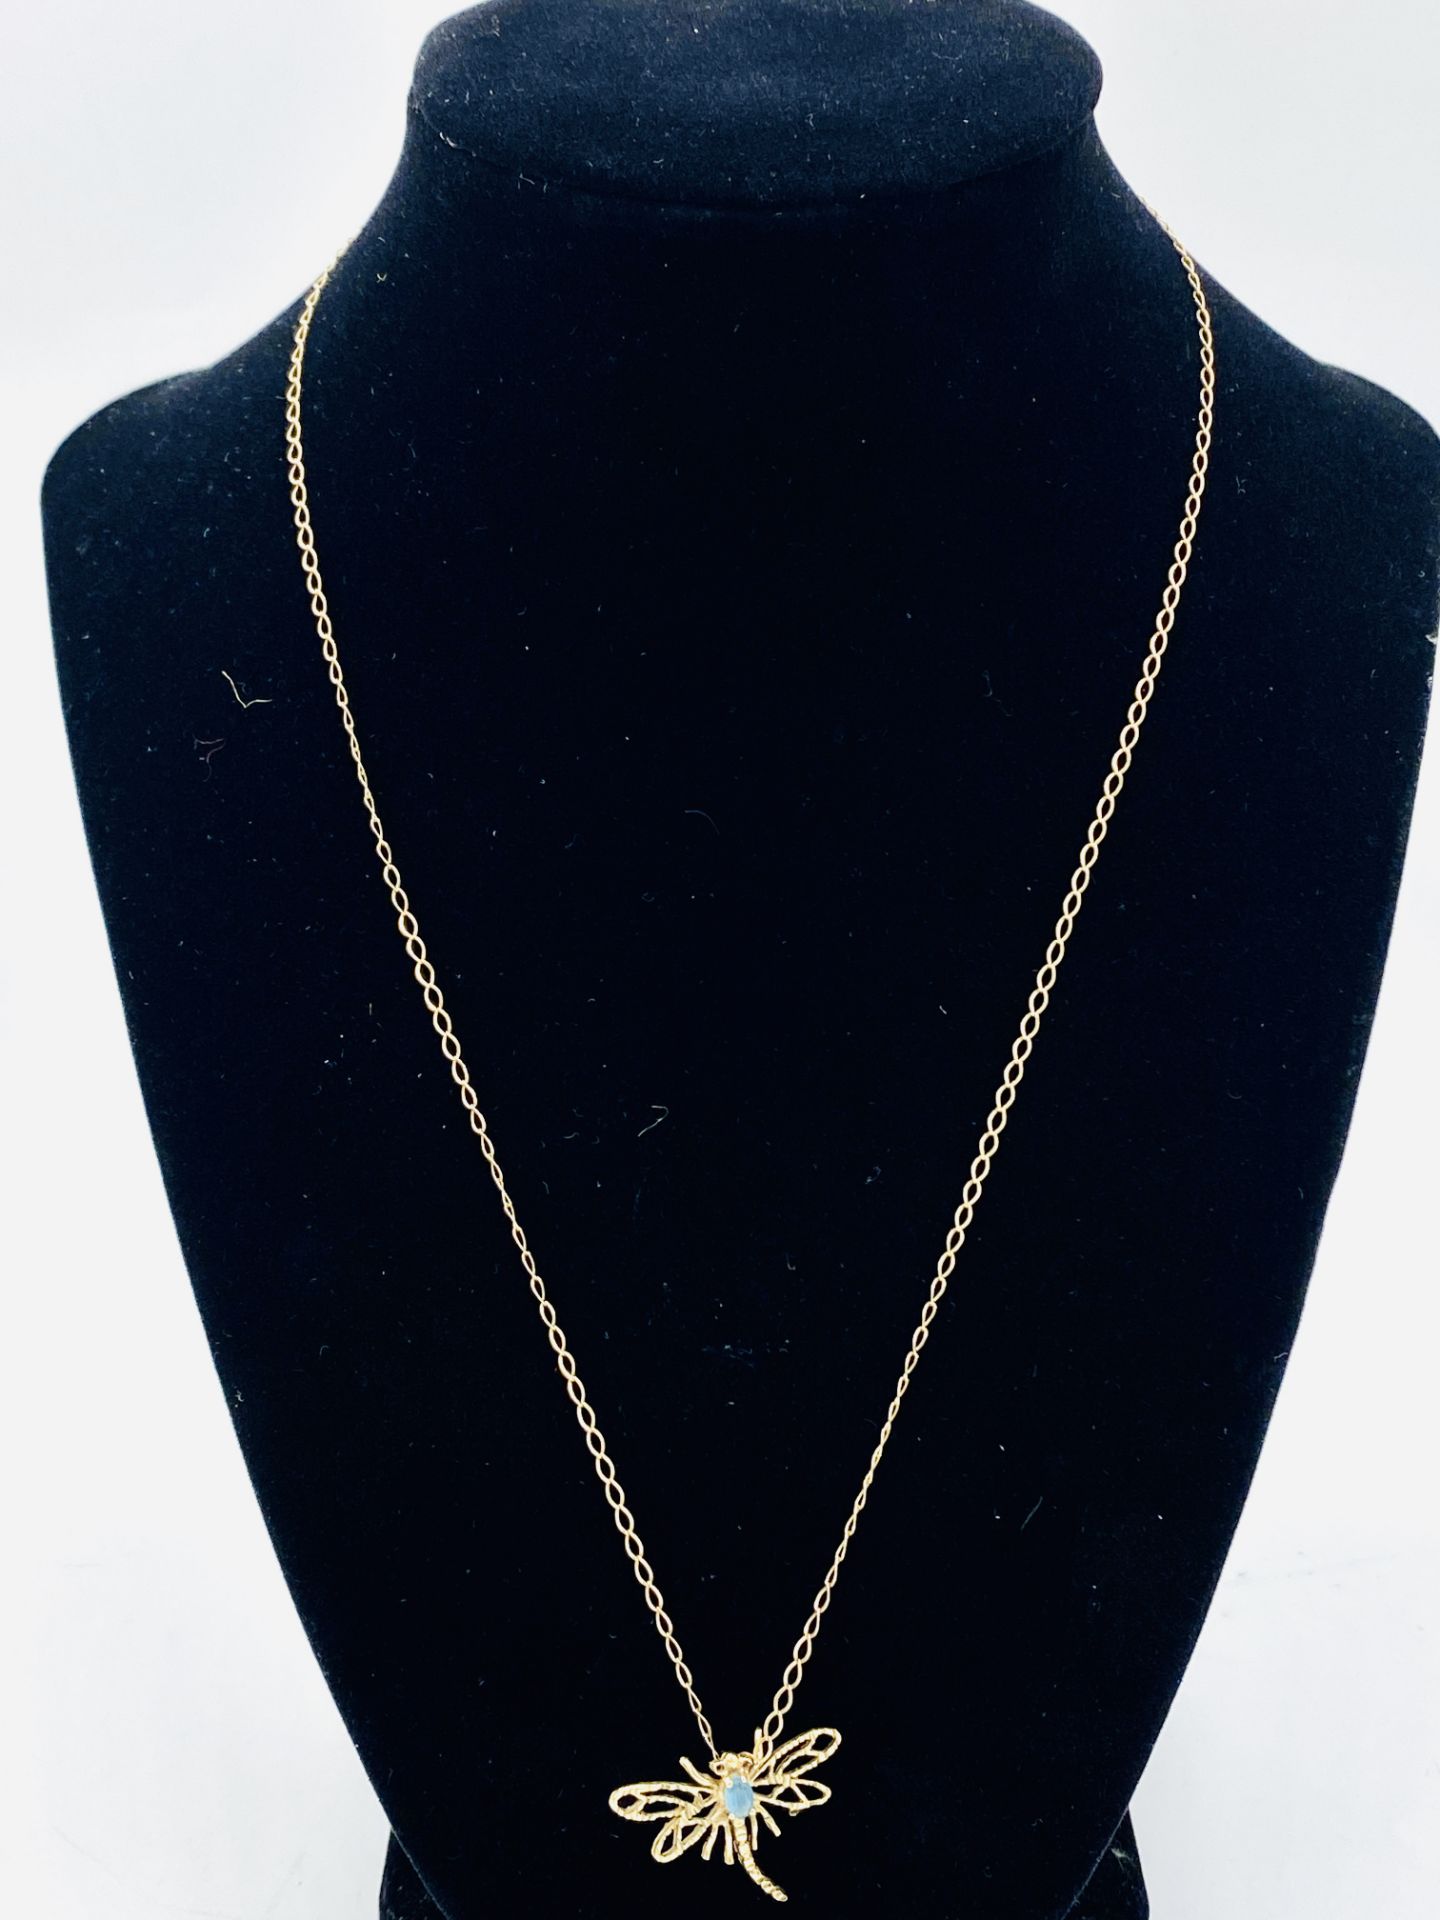 9ct gold pendant necklace